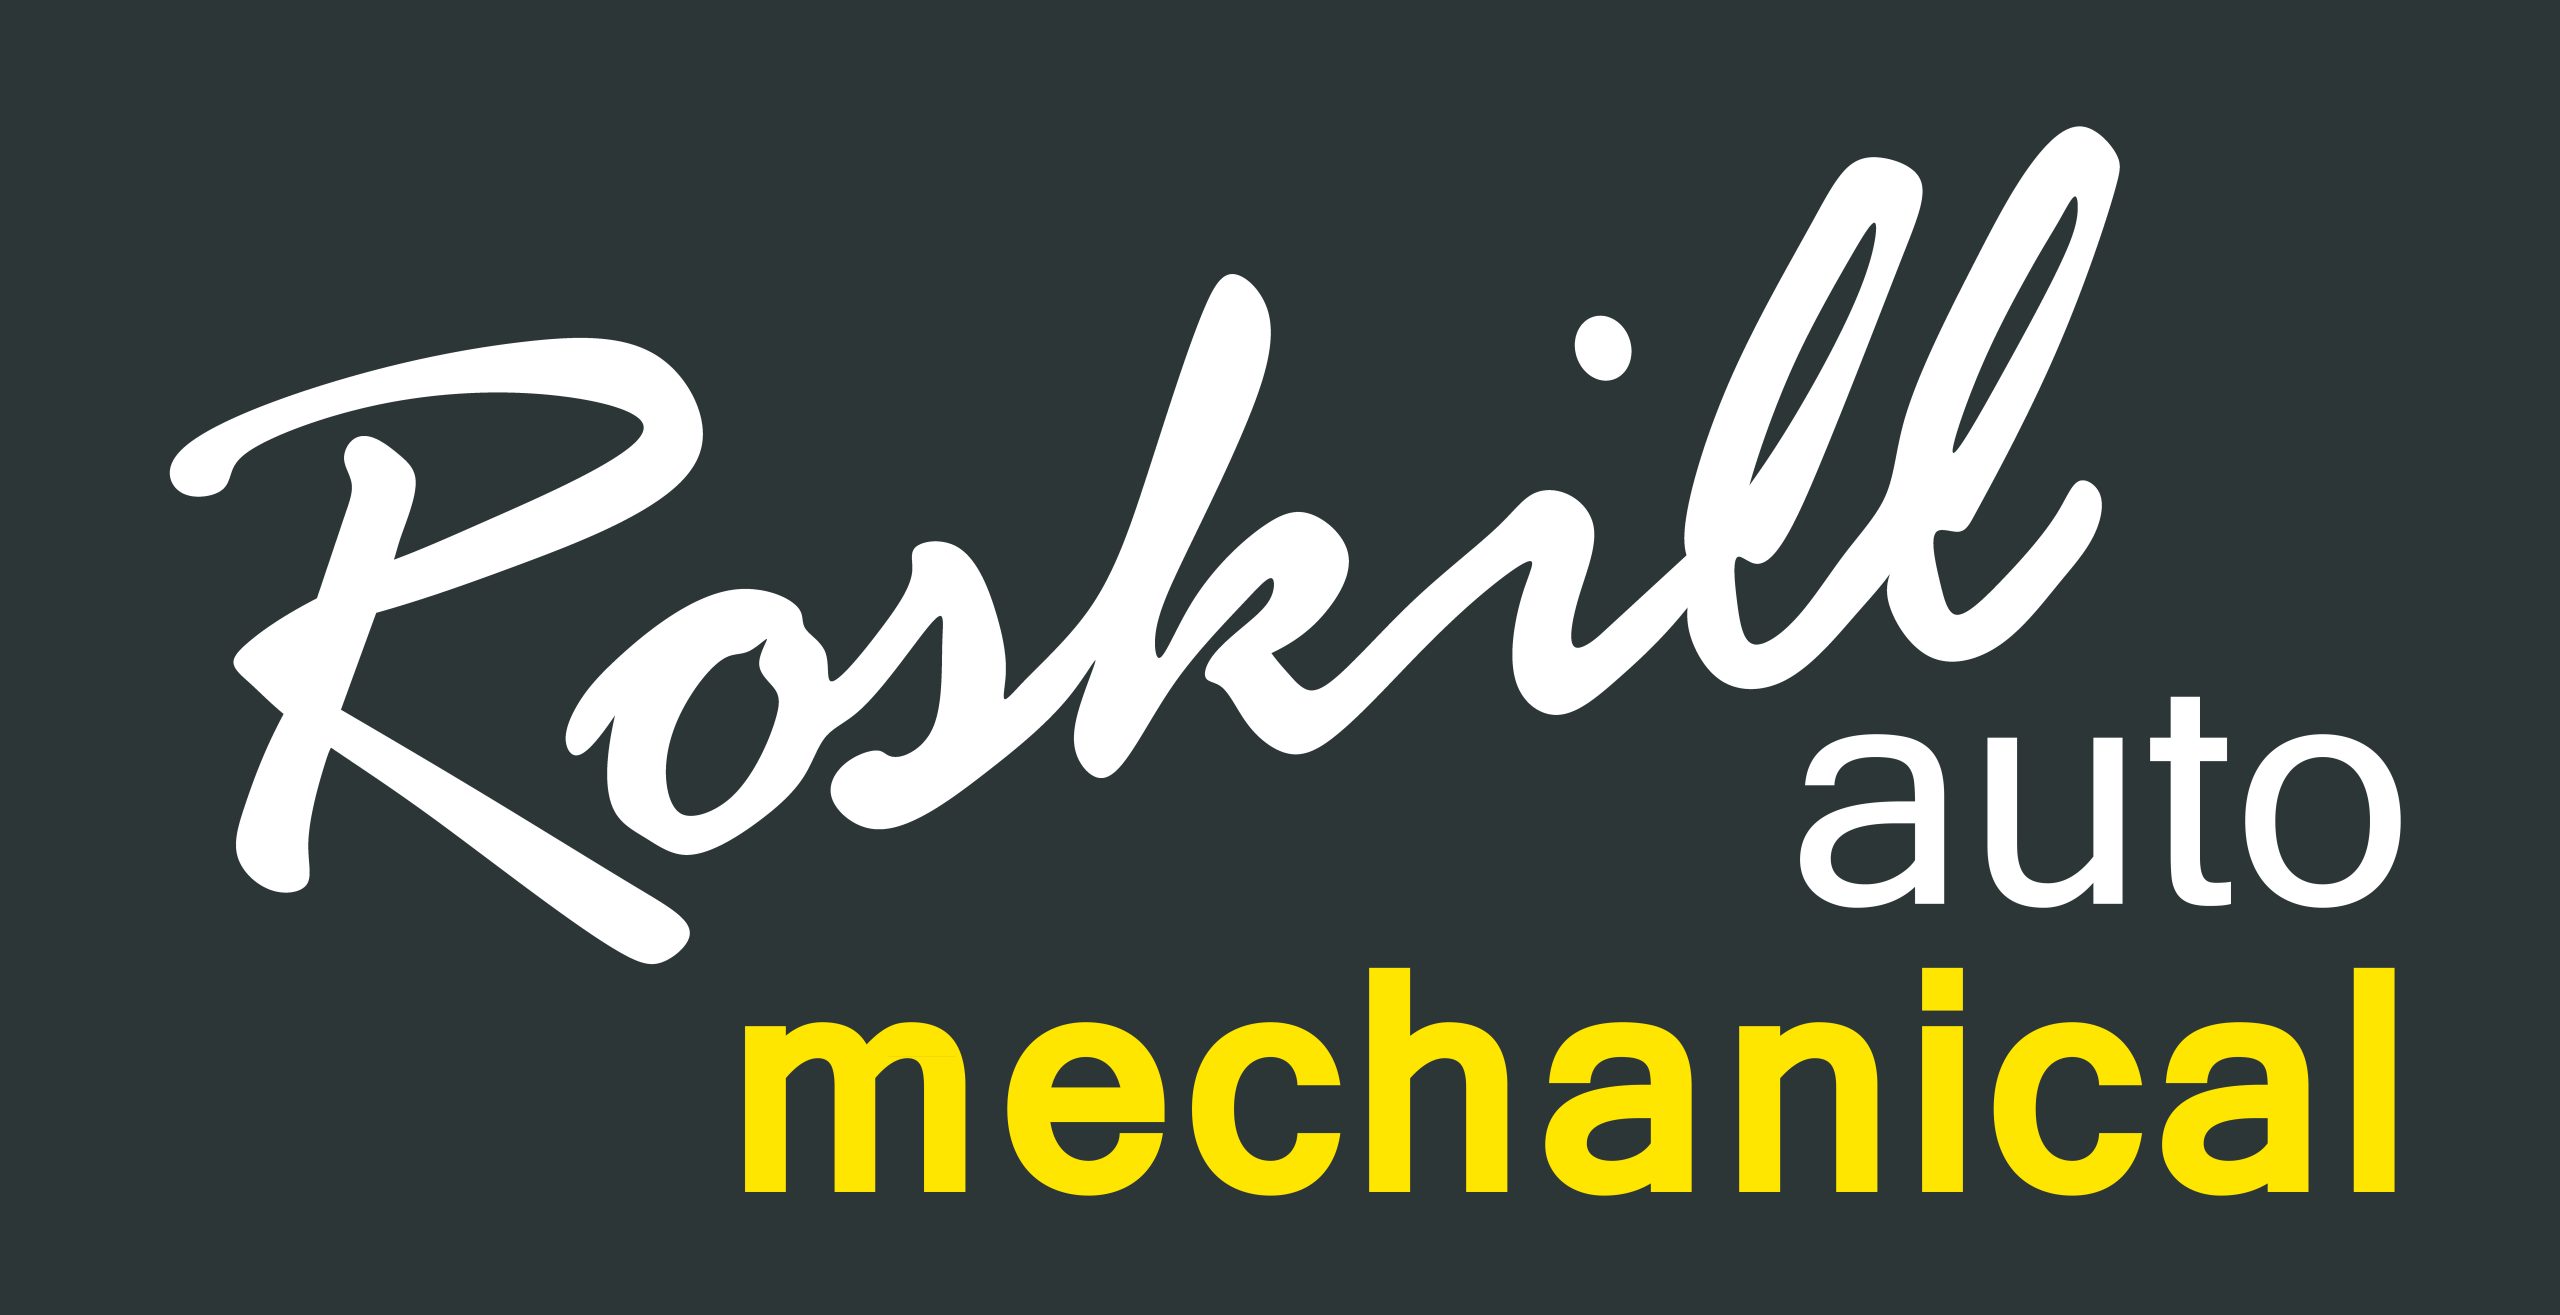 Mt Roskill Auto Mechanic